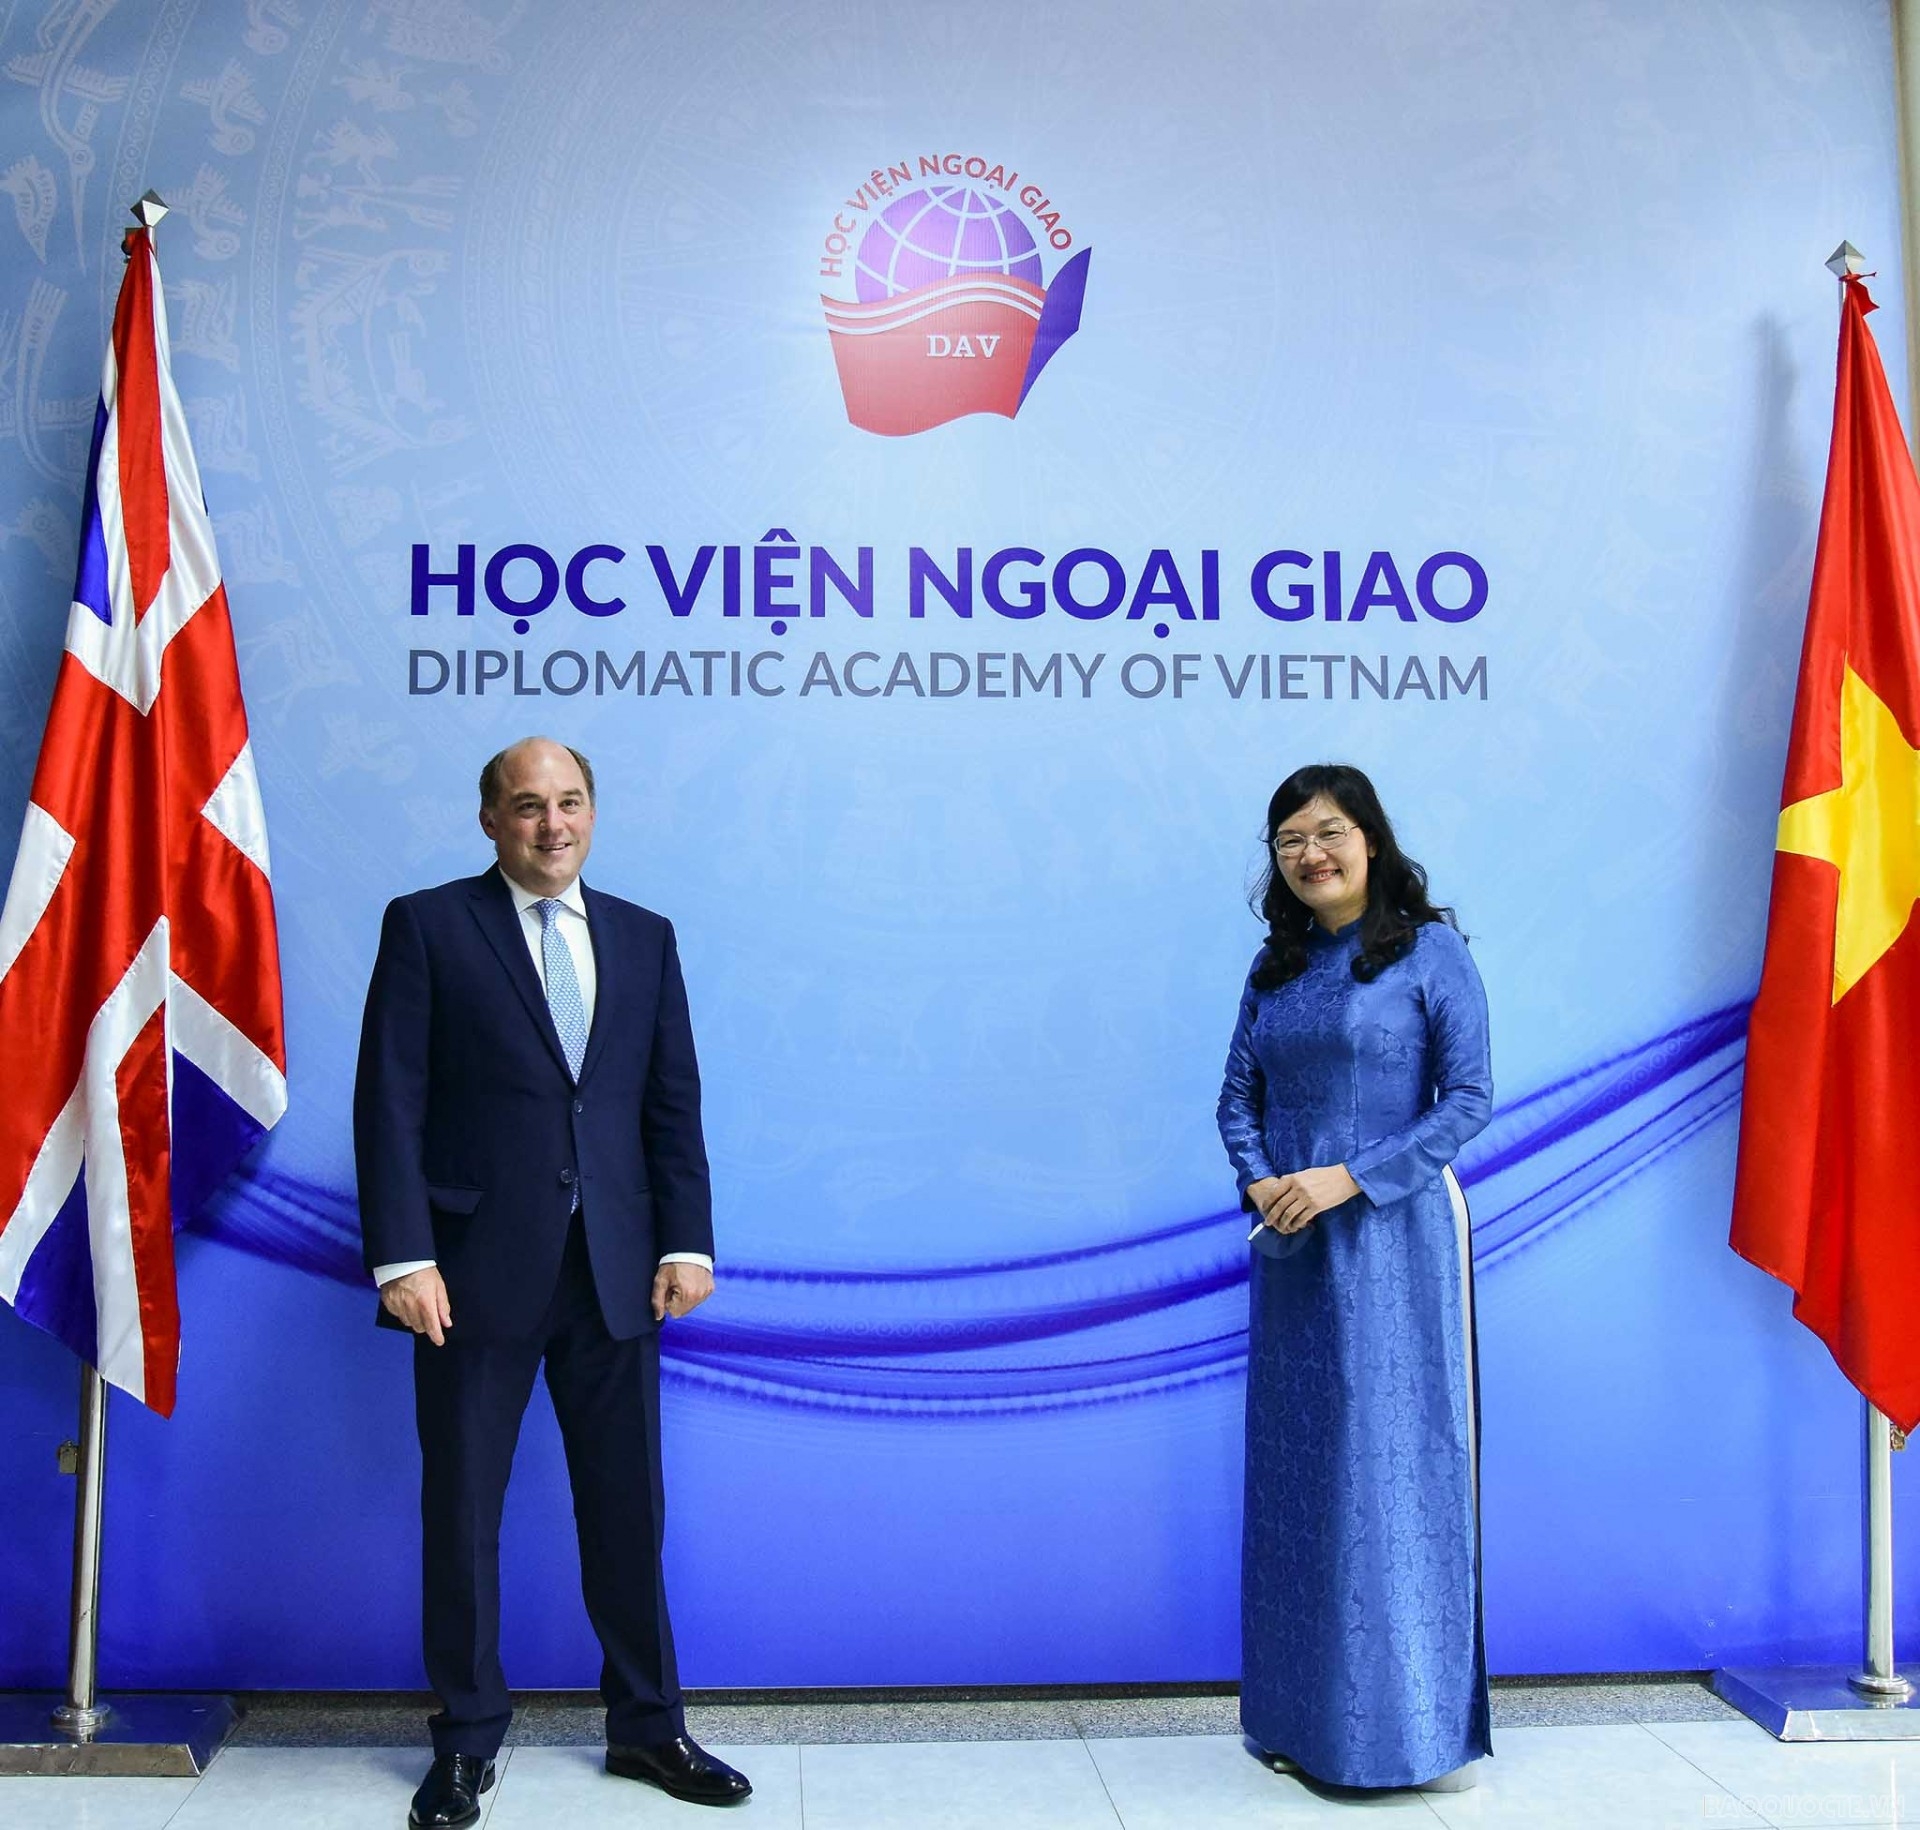 UK Defense Secretary Praises Vietnam's Increasing Role In The Region And The World